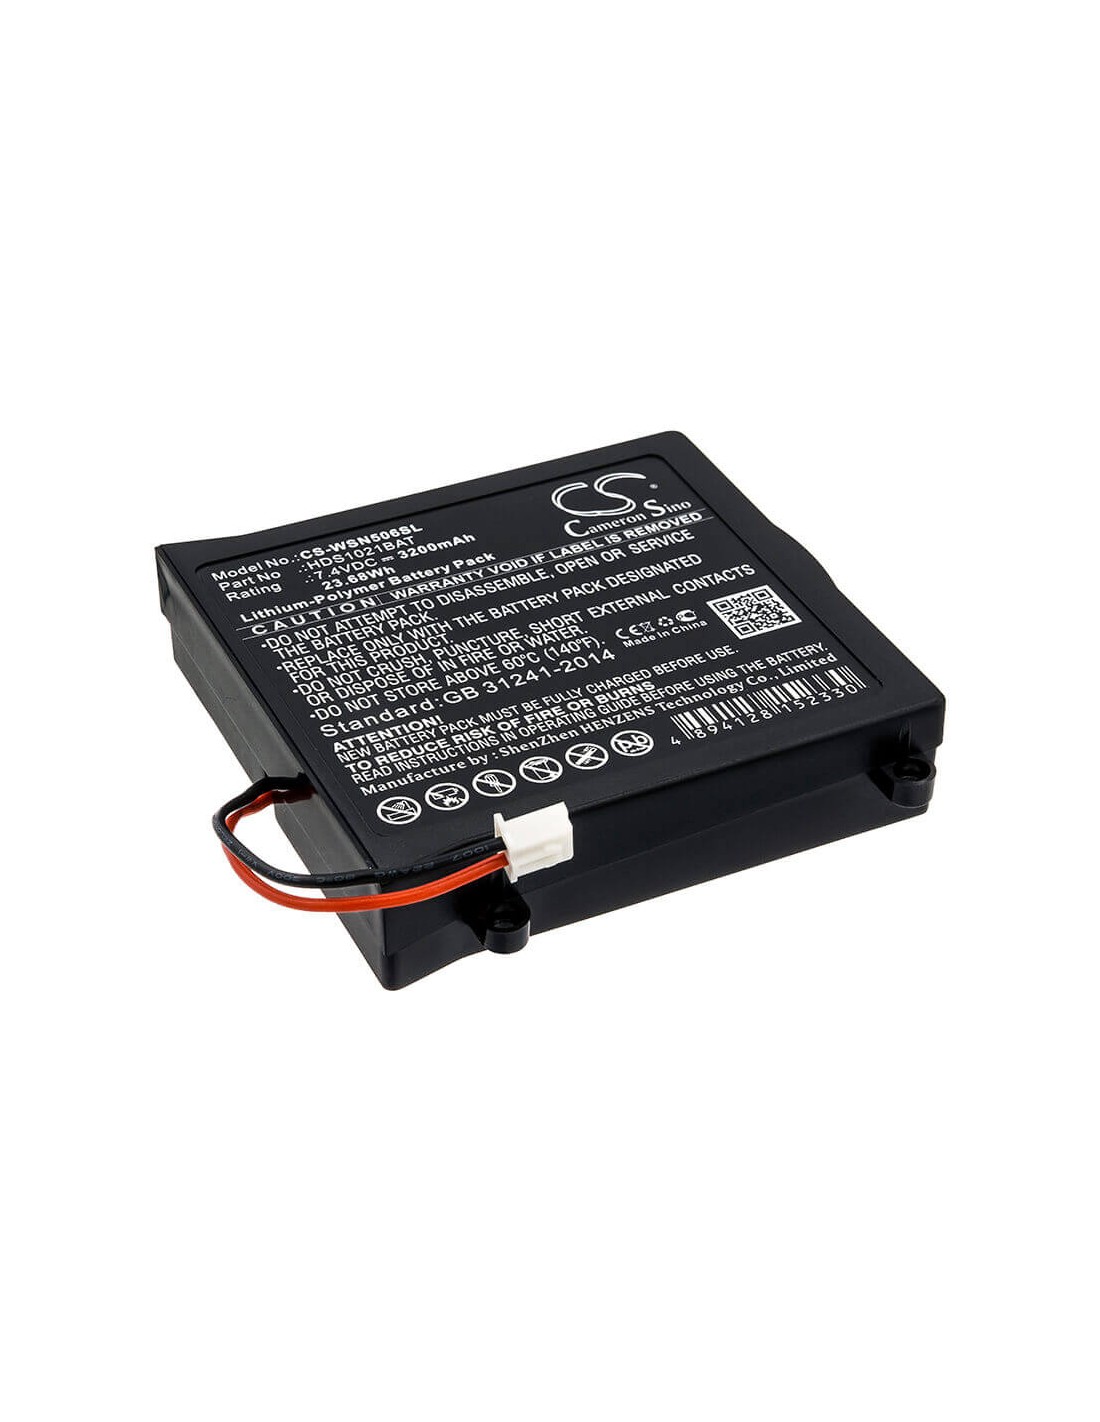 Battery for Owon, Hds1021m, Hds-n Oscilloscope 7.4V, 3200mAh - 23.68Wh